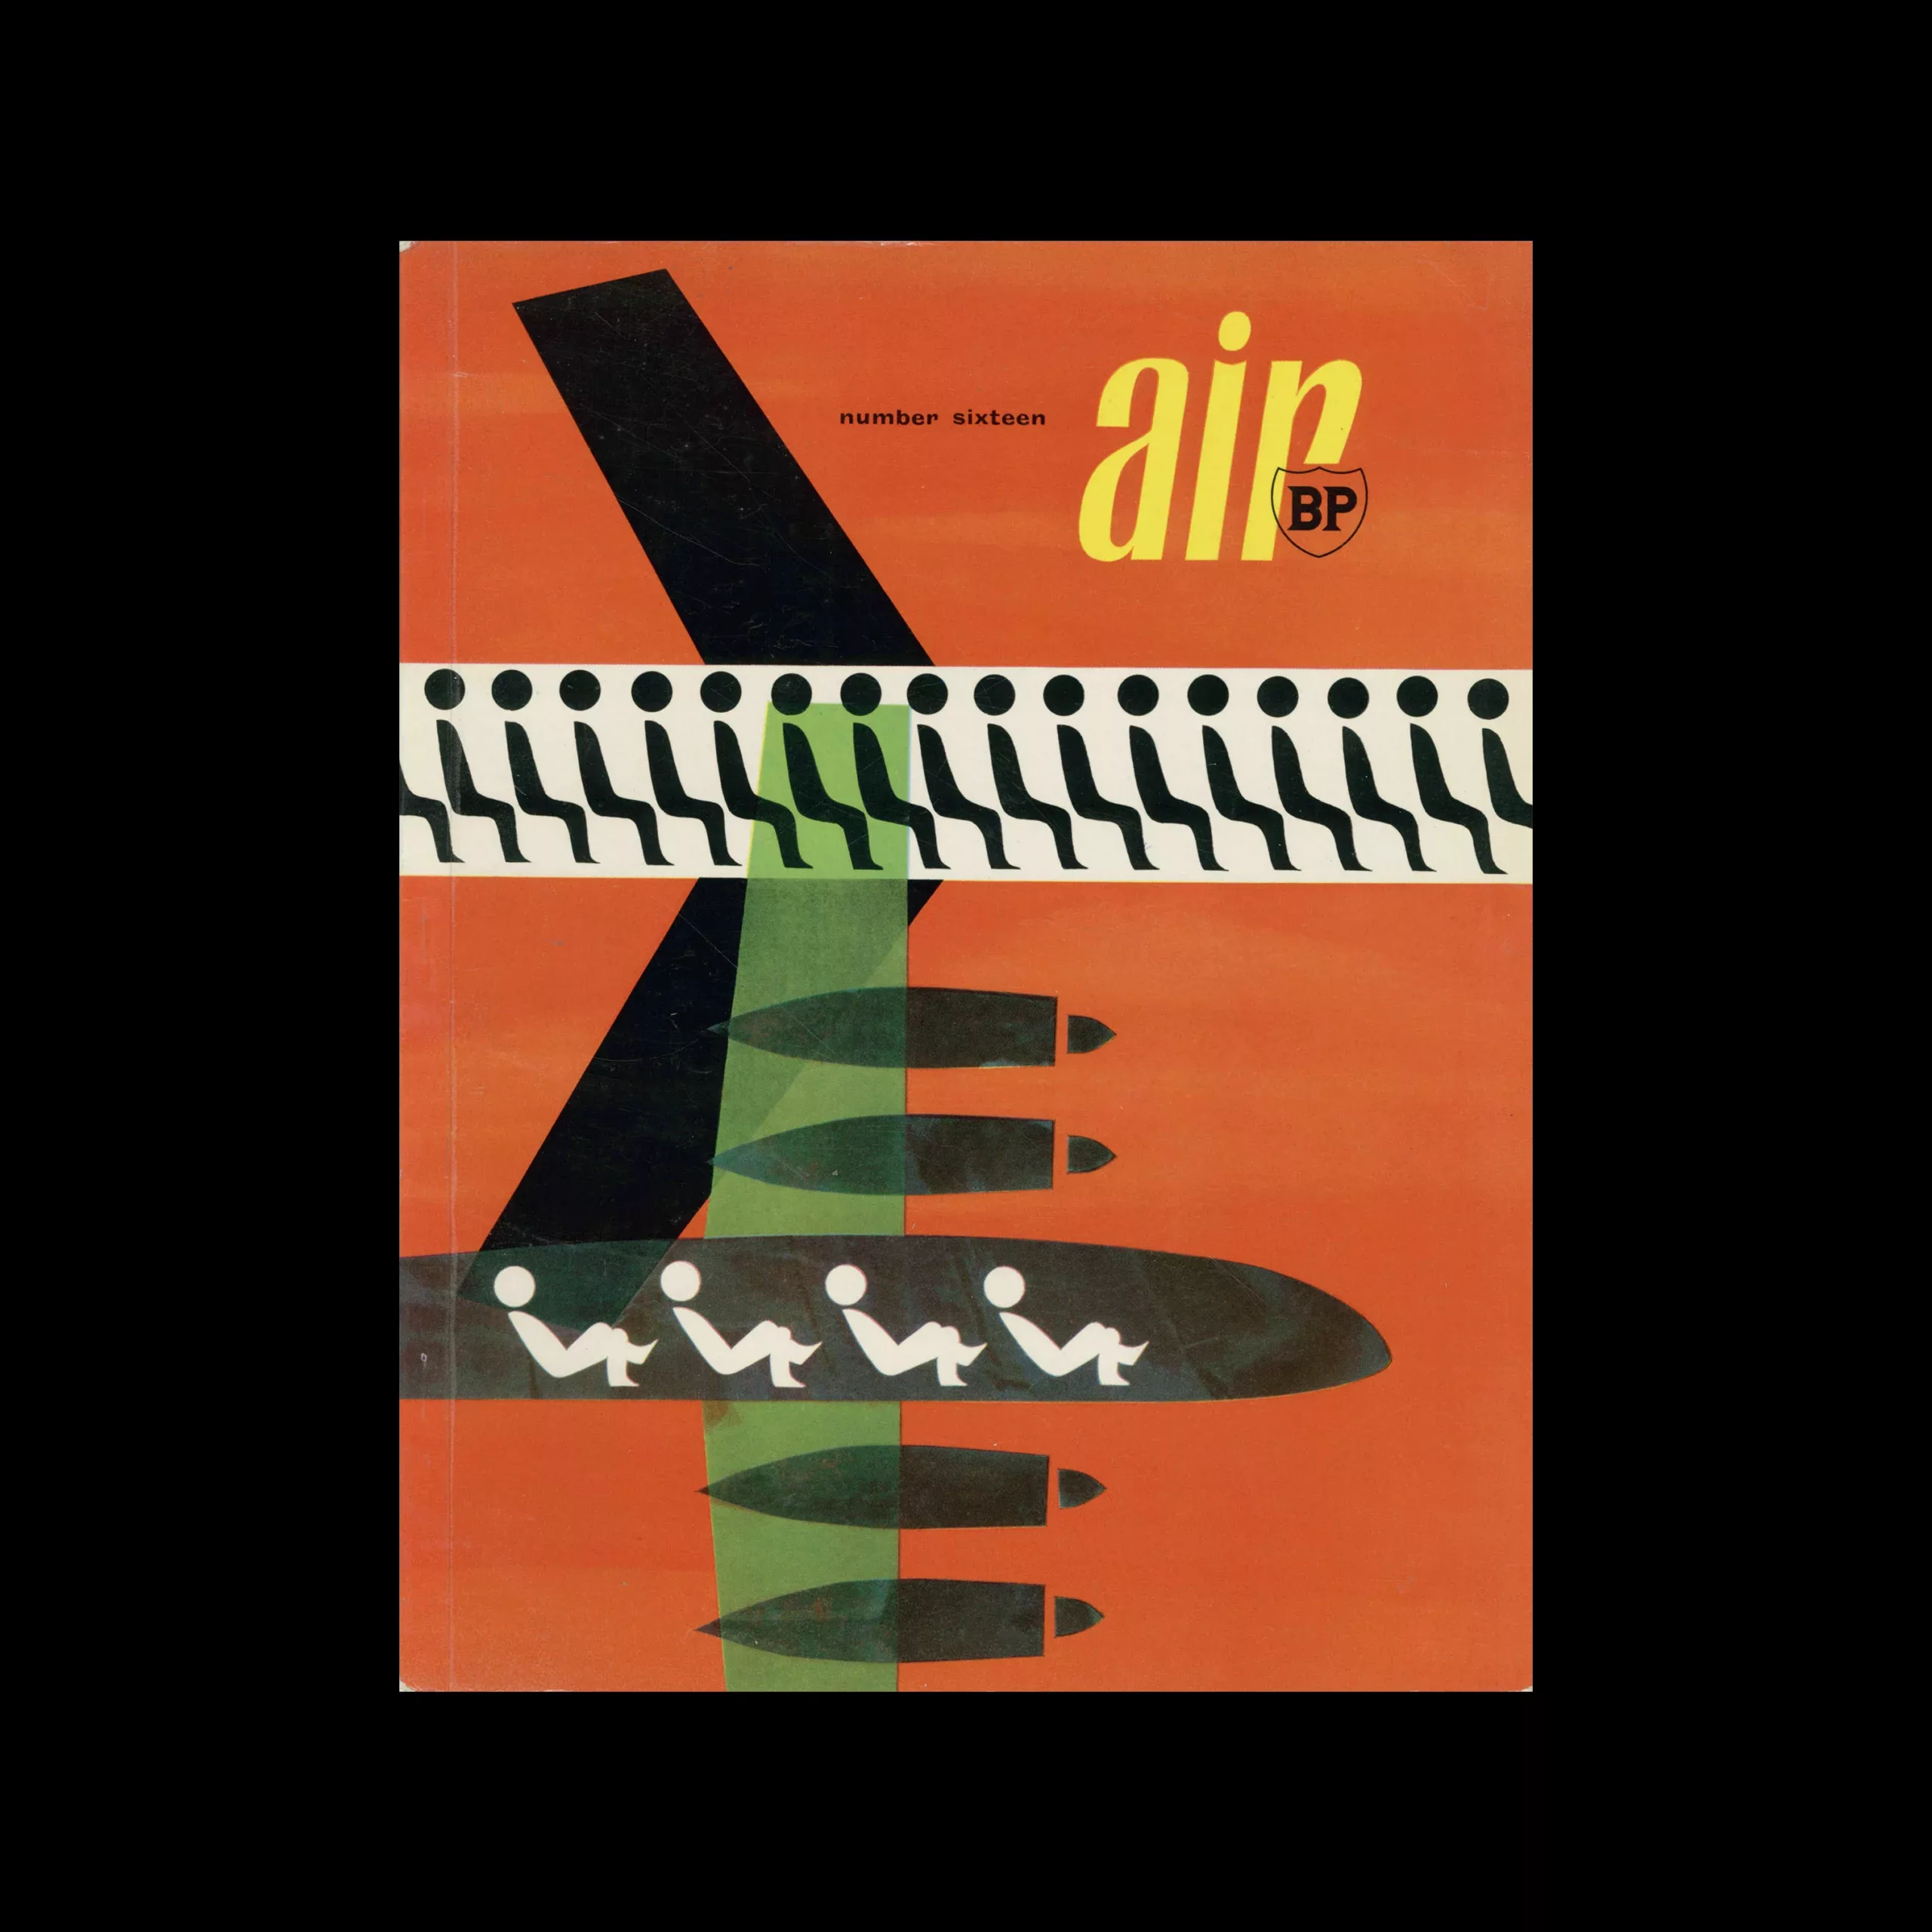 Air BP, 16, 1960s. Designed by Design Partnership Ltd